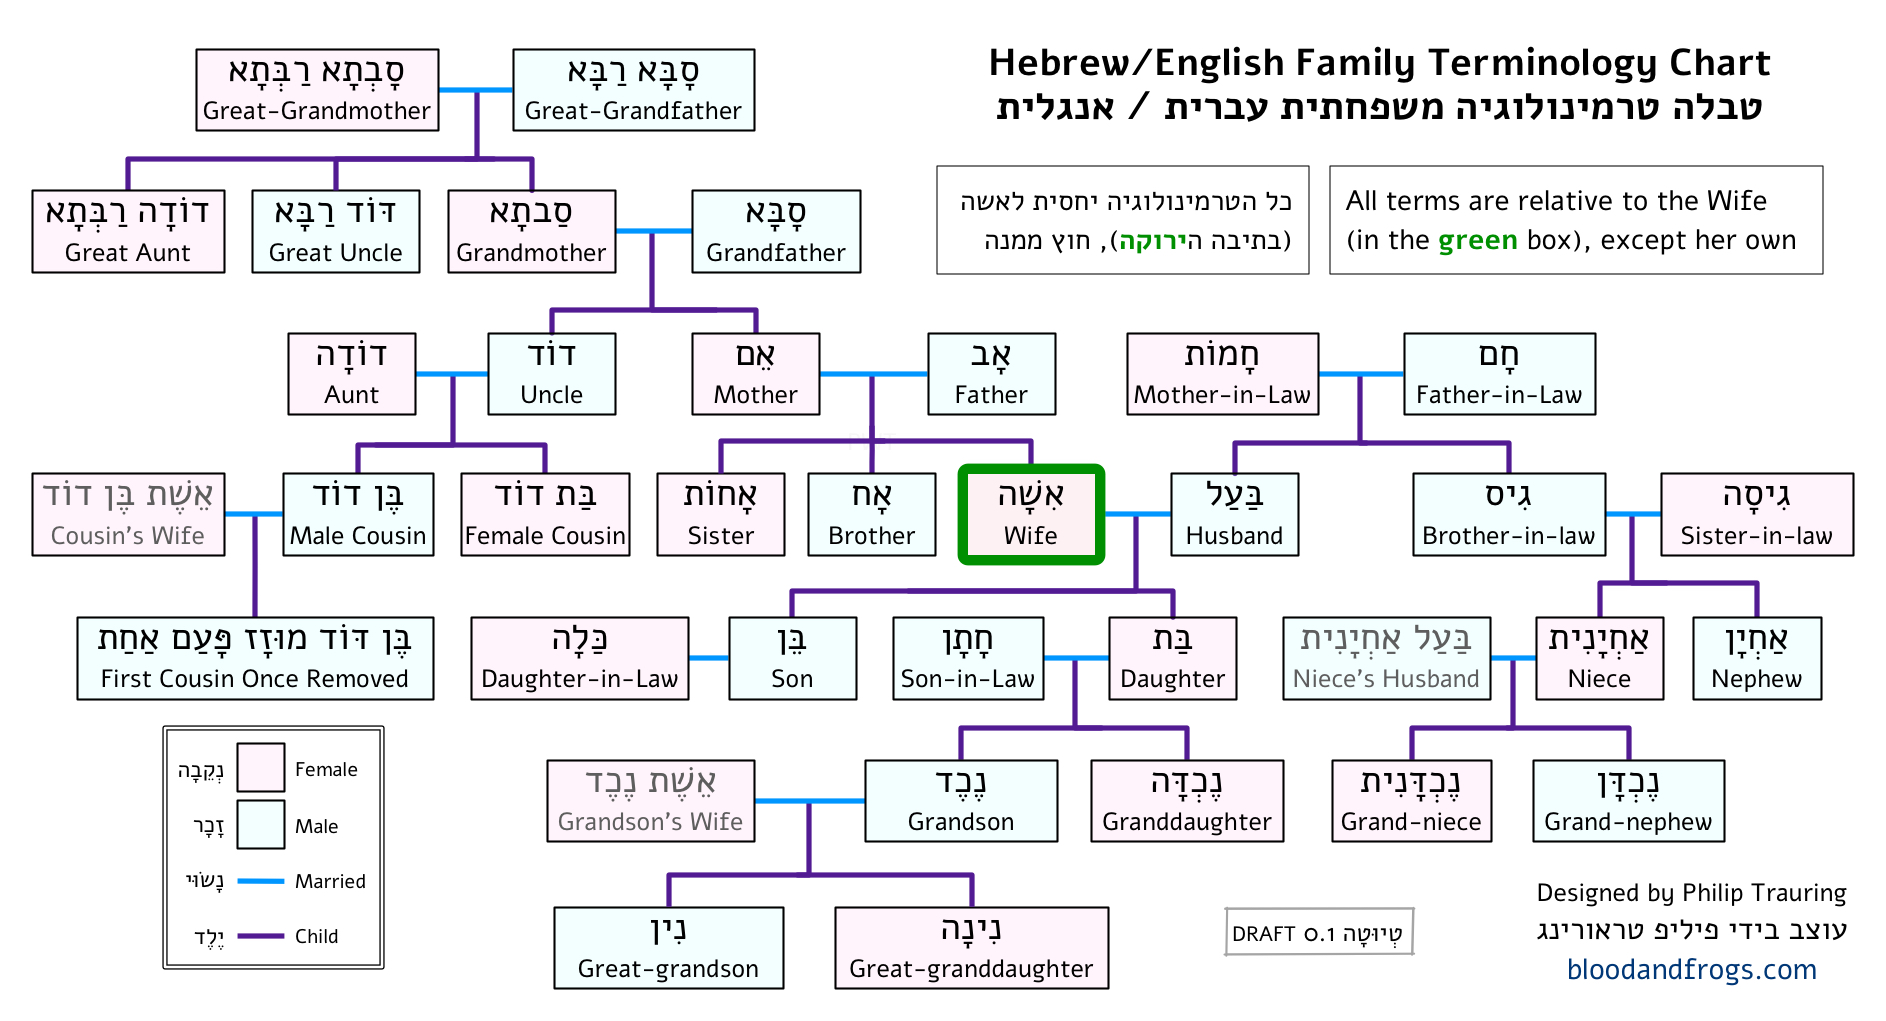 Hebrew Transliteration Chart